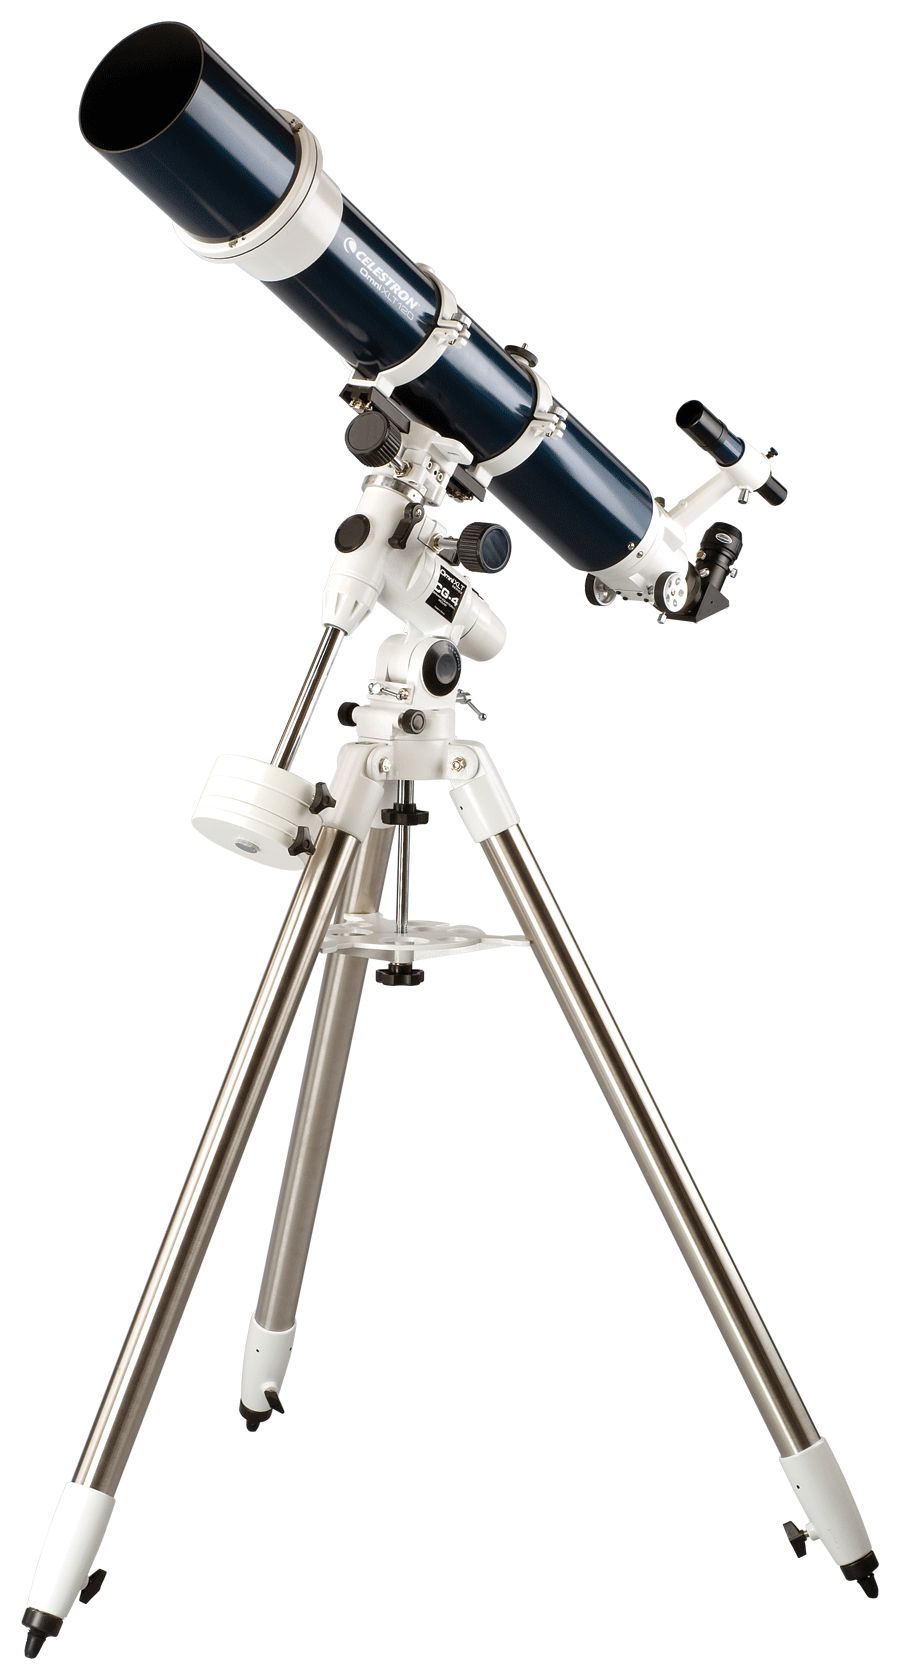 Omni XLT 120 Telescope